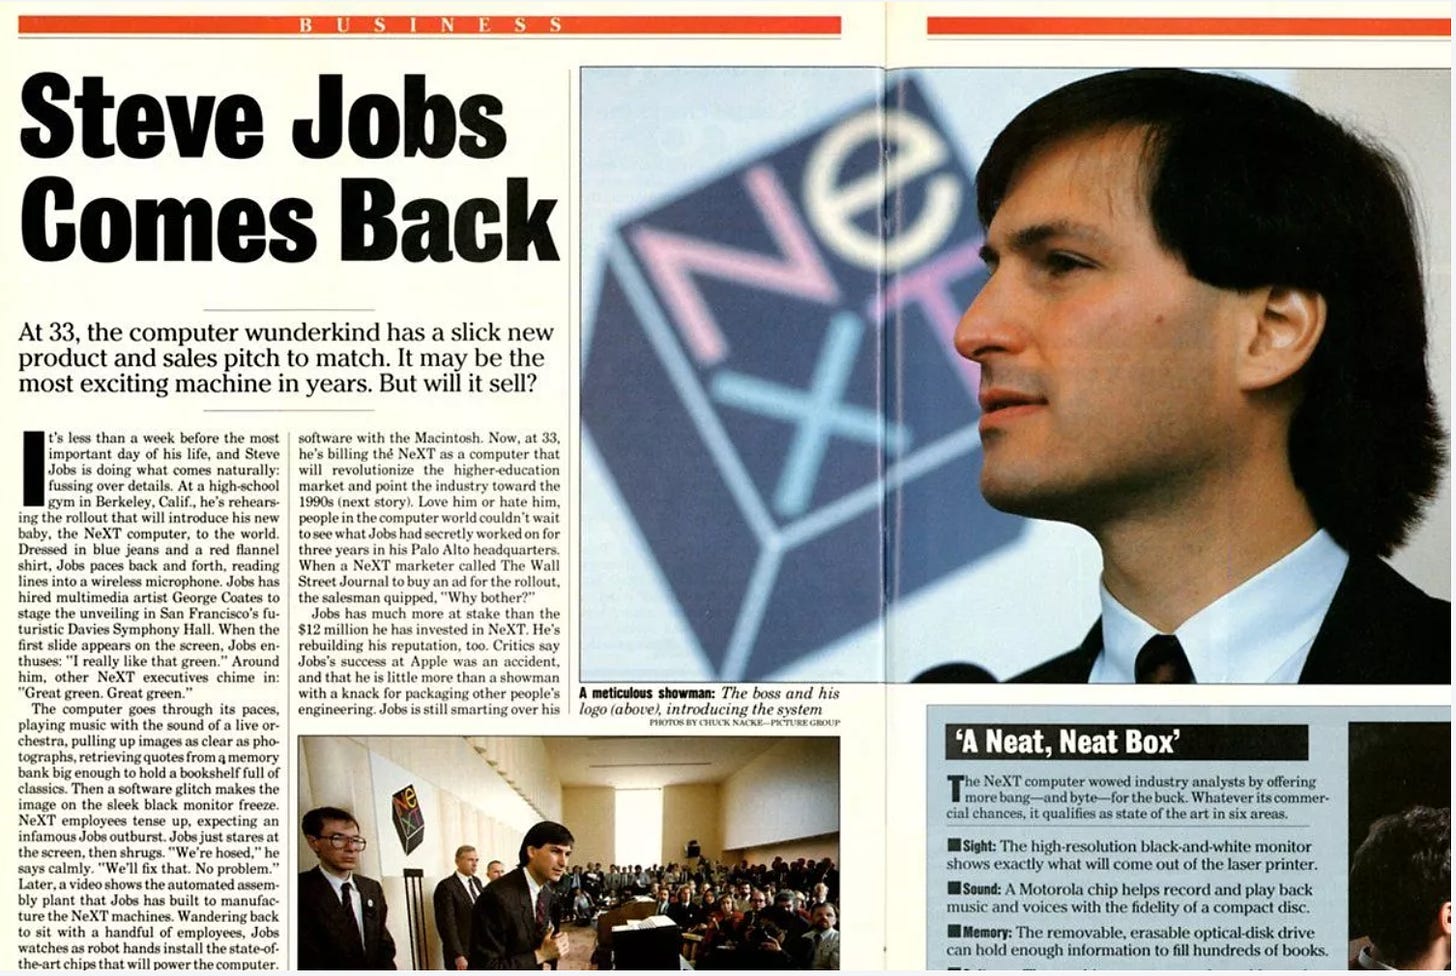 Newsweek magazine https://www.newsweek.com/steve-jobs-comes-back-207006